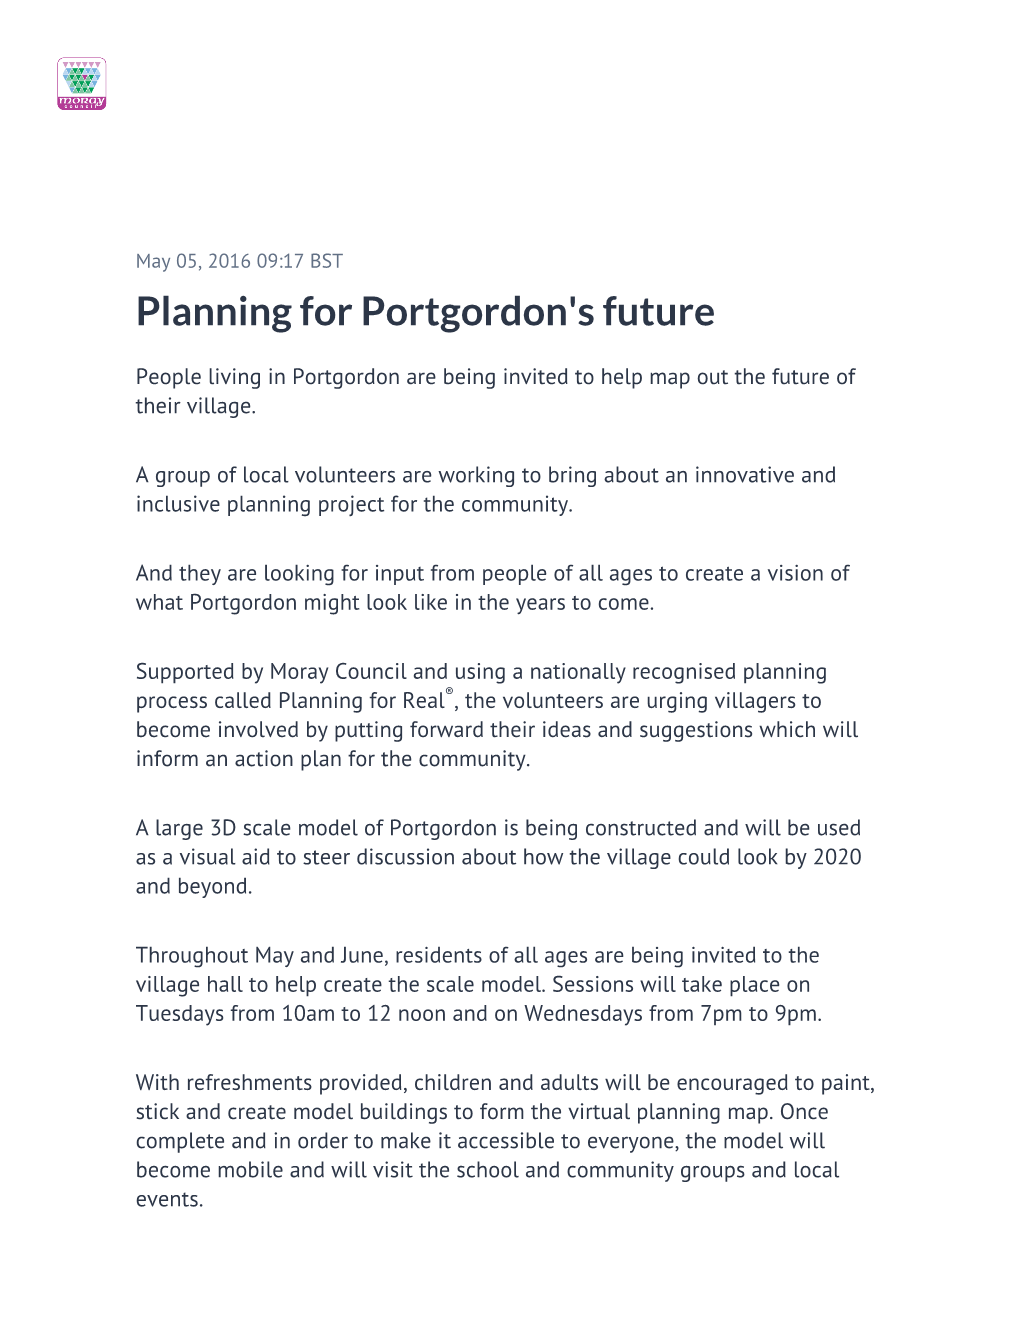 Planning for Portgordon's Future